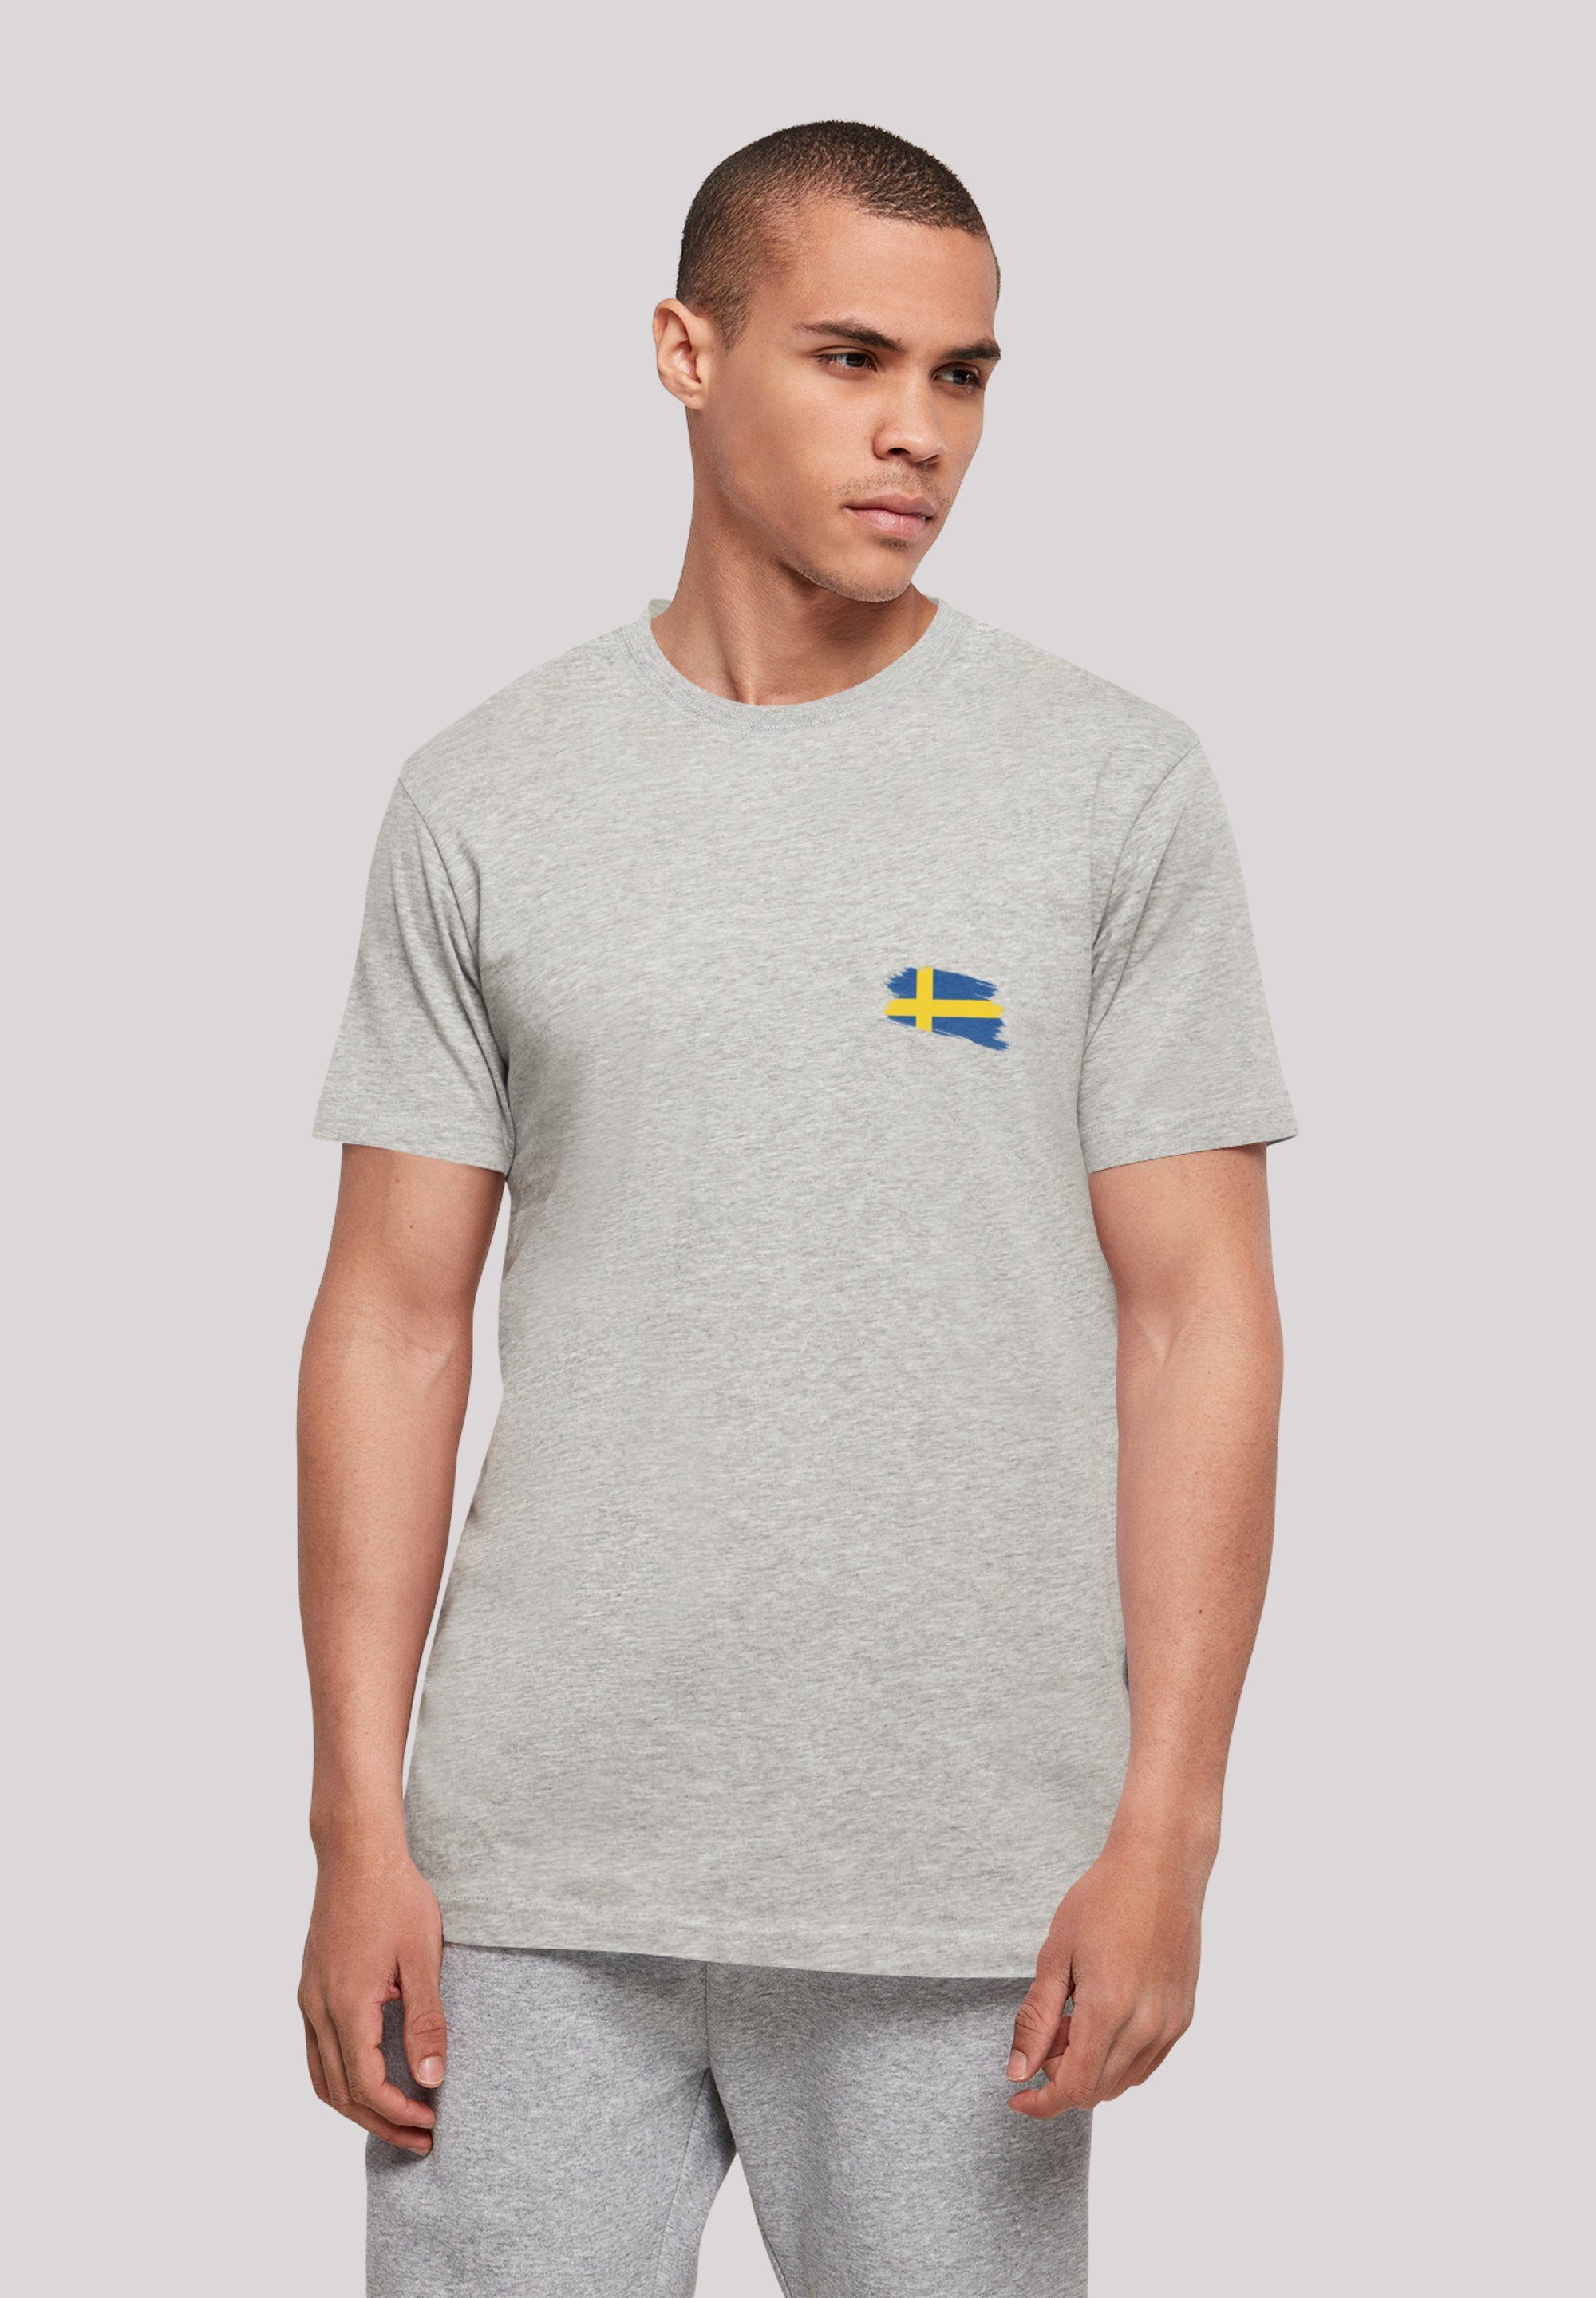 F4NT4STIC Flagge Print Sweden grey heather Schweden T-Shirt